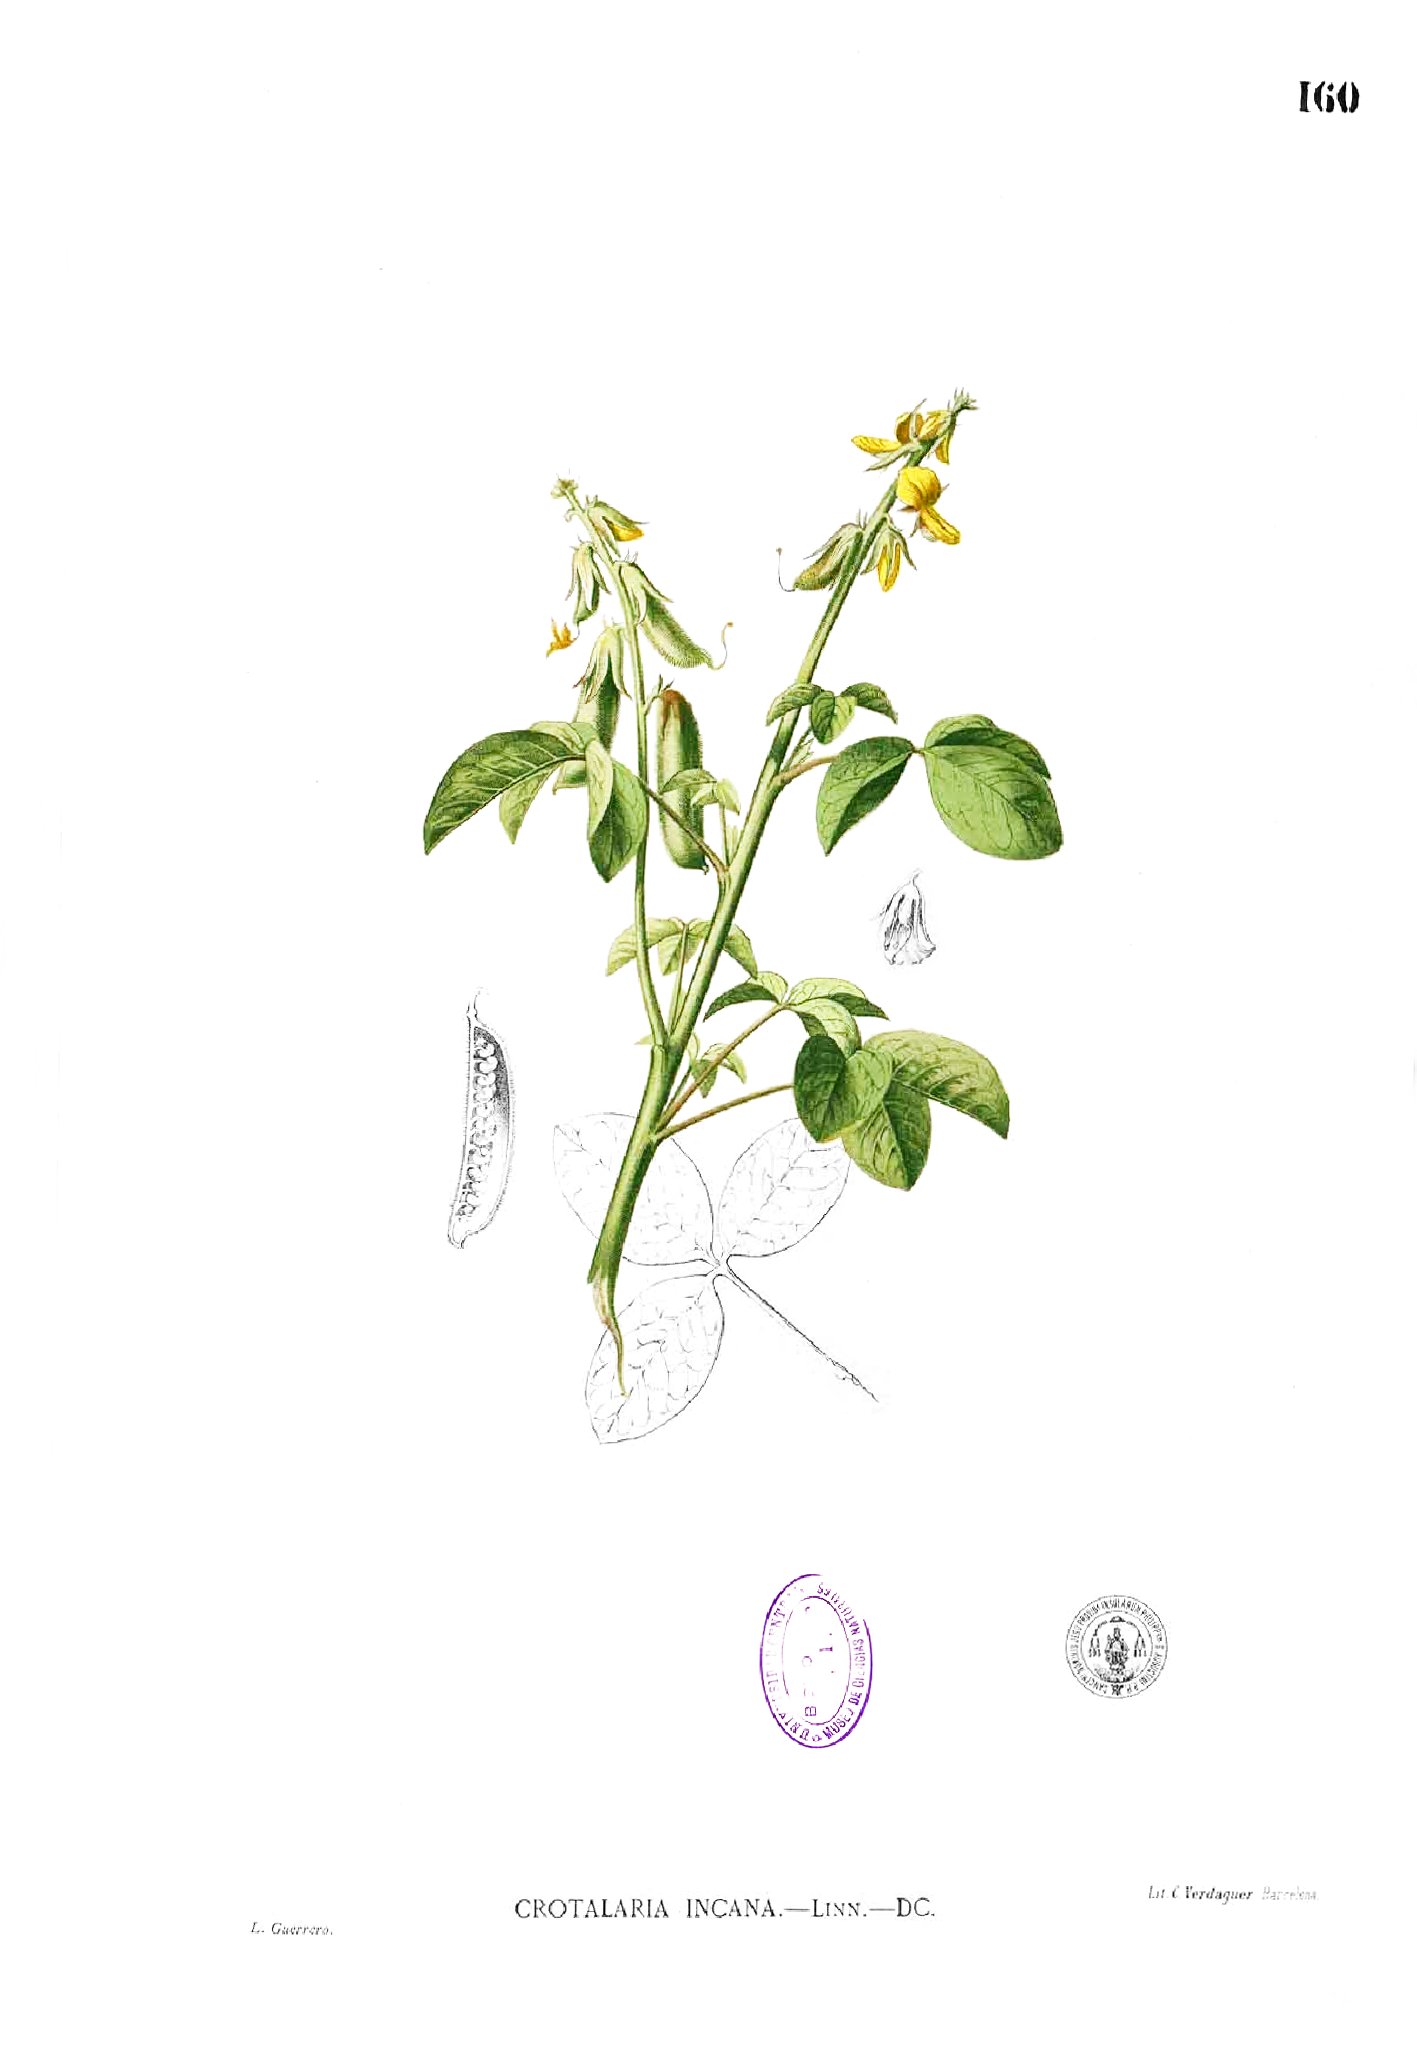 Crotalaria incana Blanco1.160